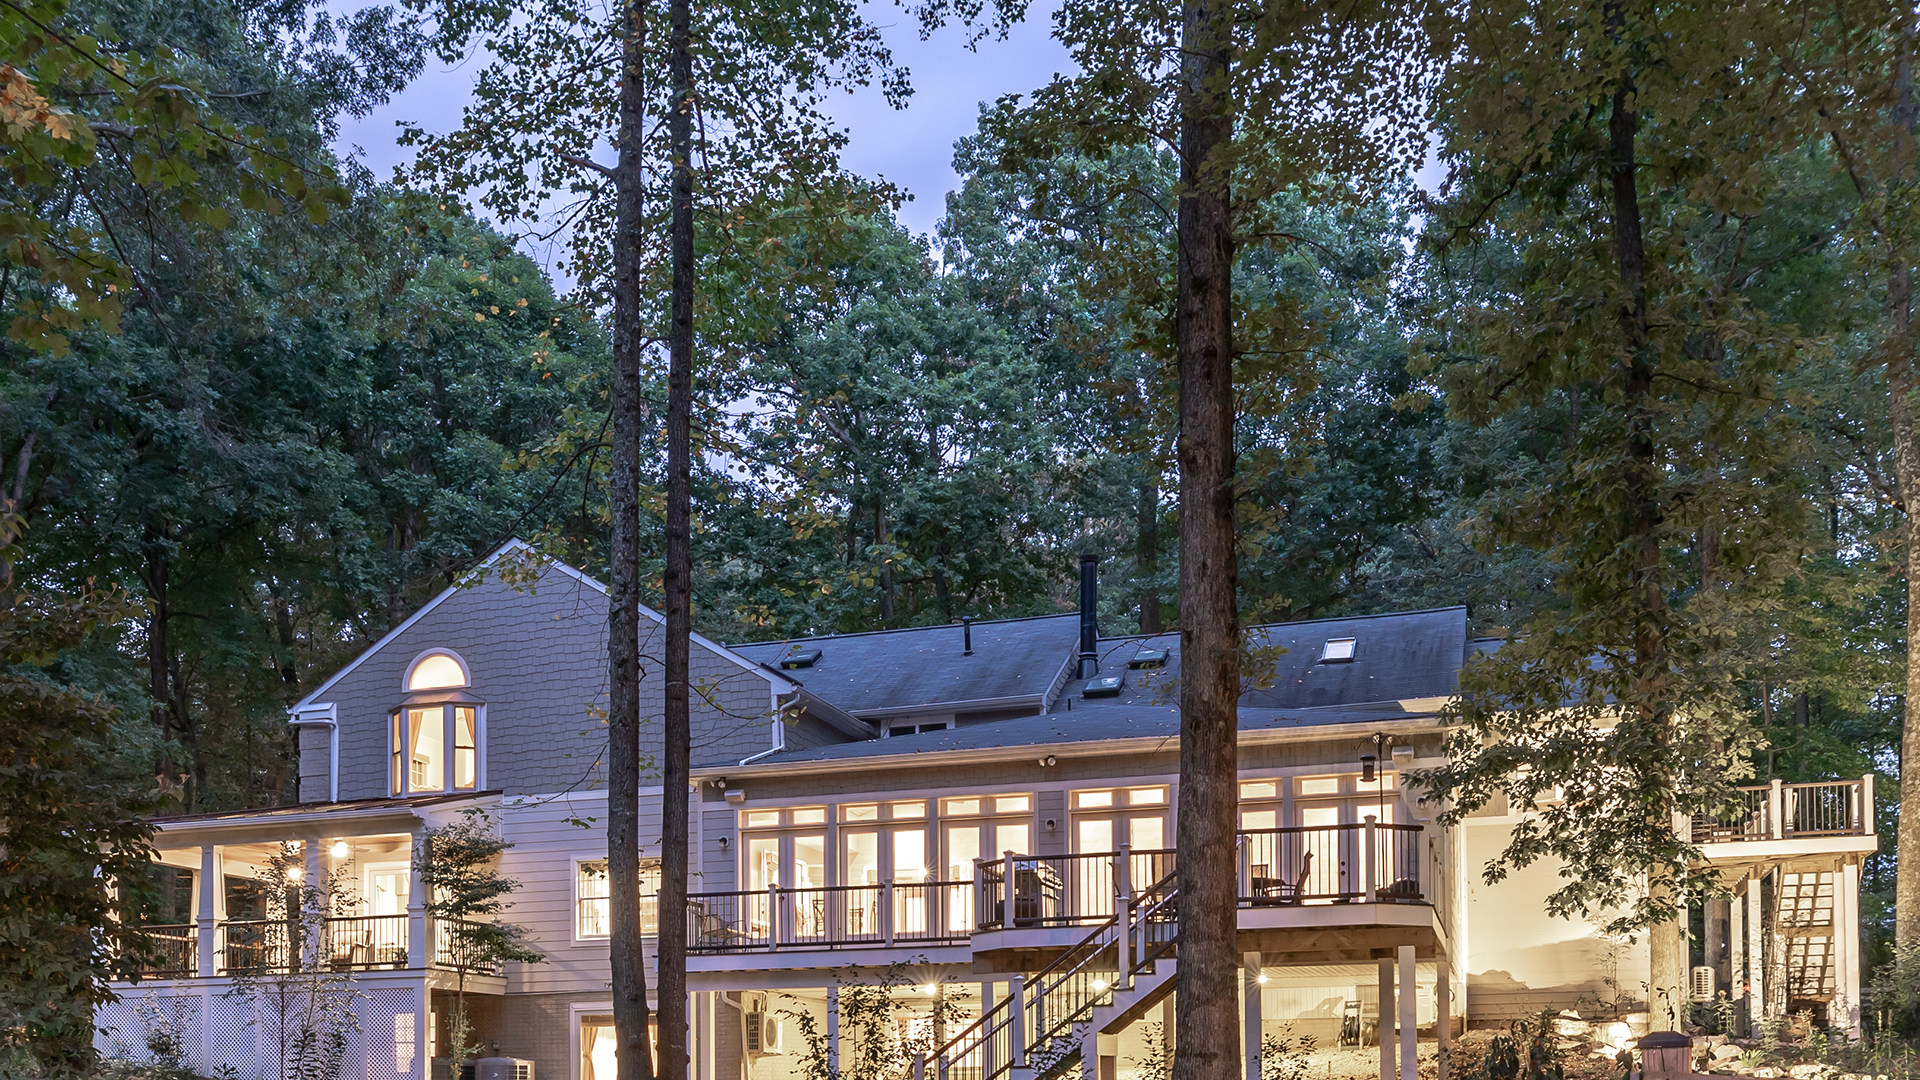 2020 NARI Capital CotY Grand Award Winner, Residential Landscape Design/ Outdoor Living $100,000 to $250,000